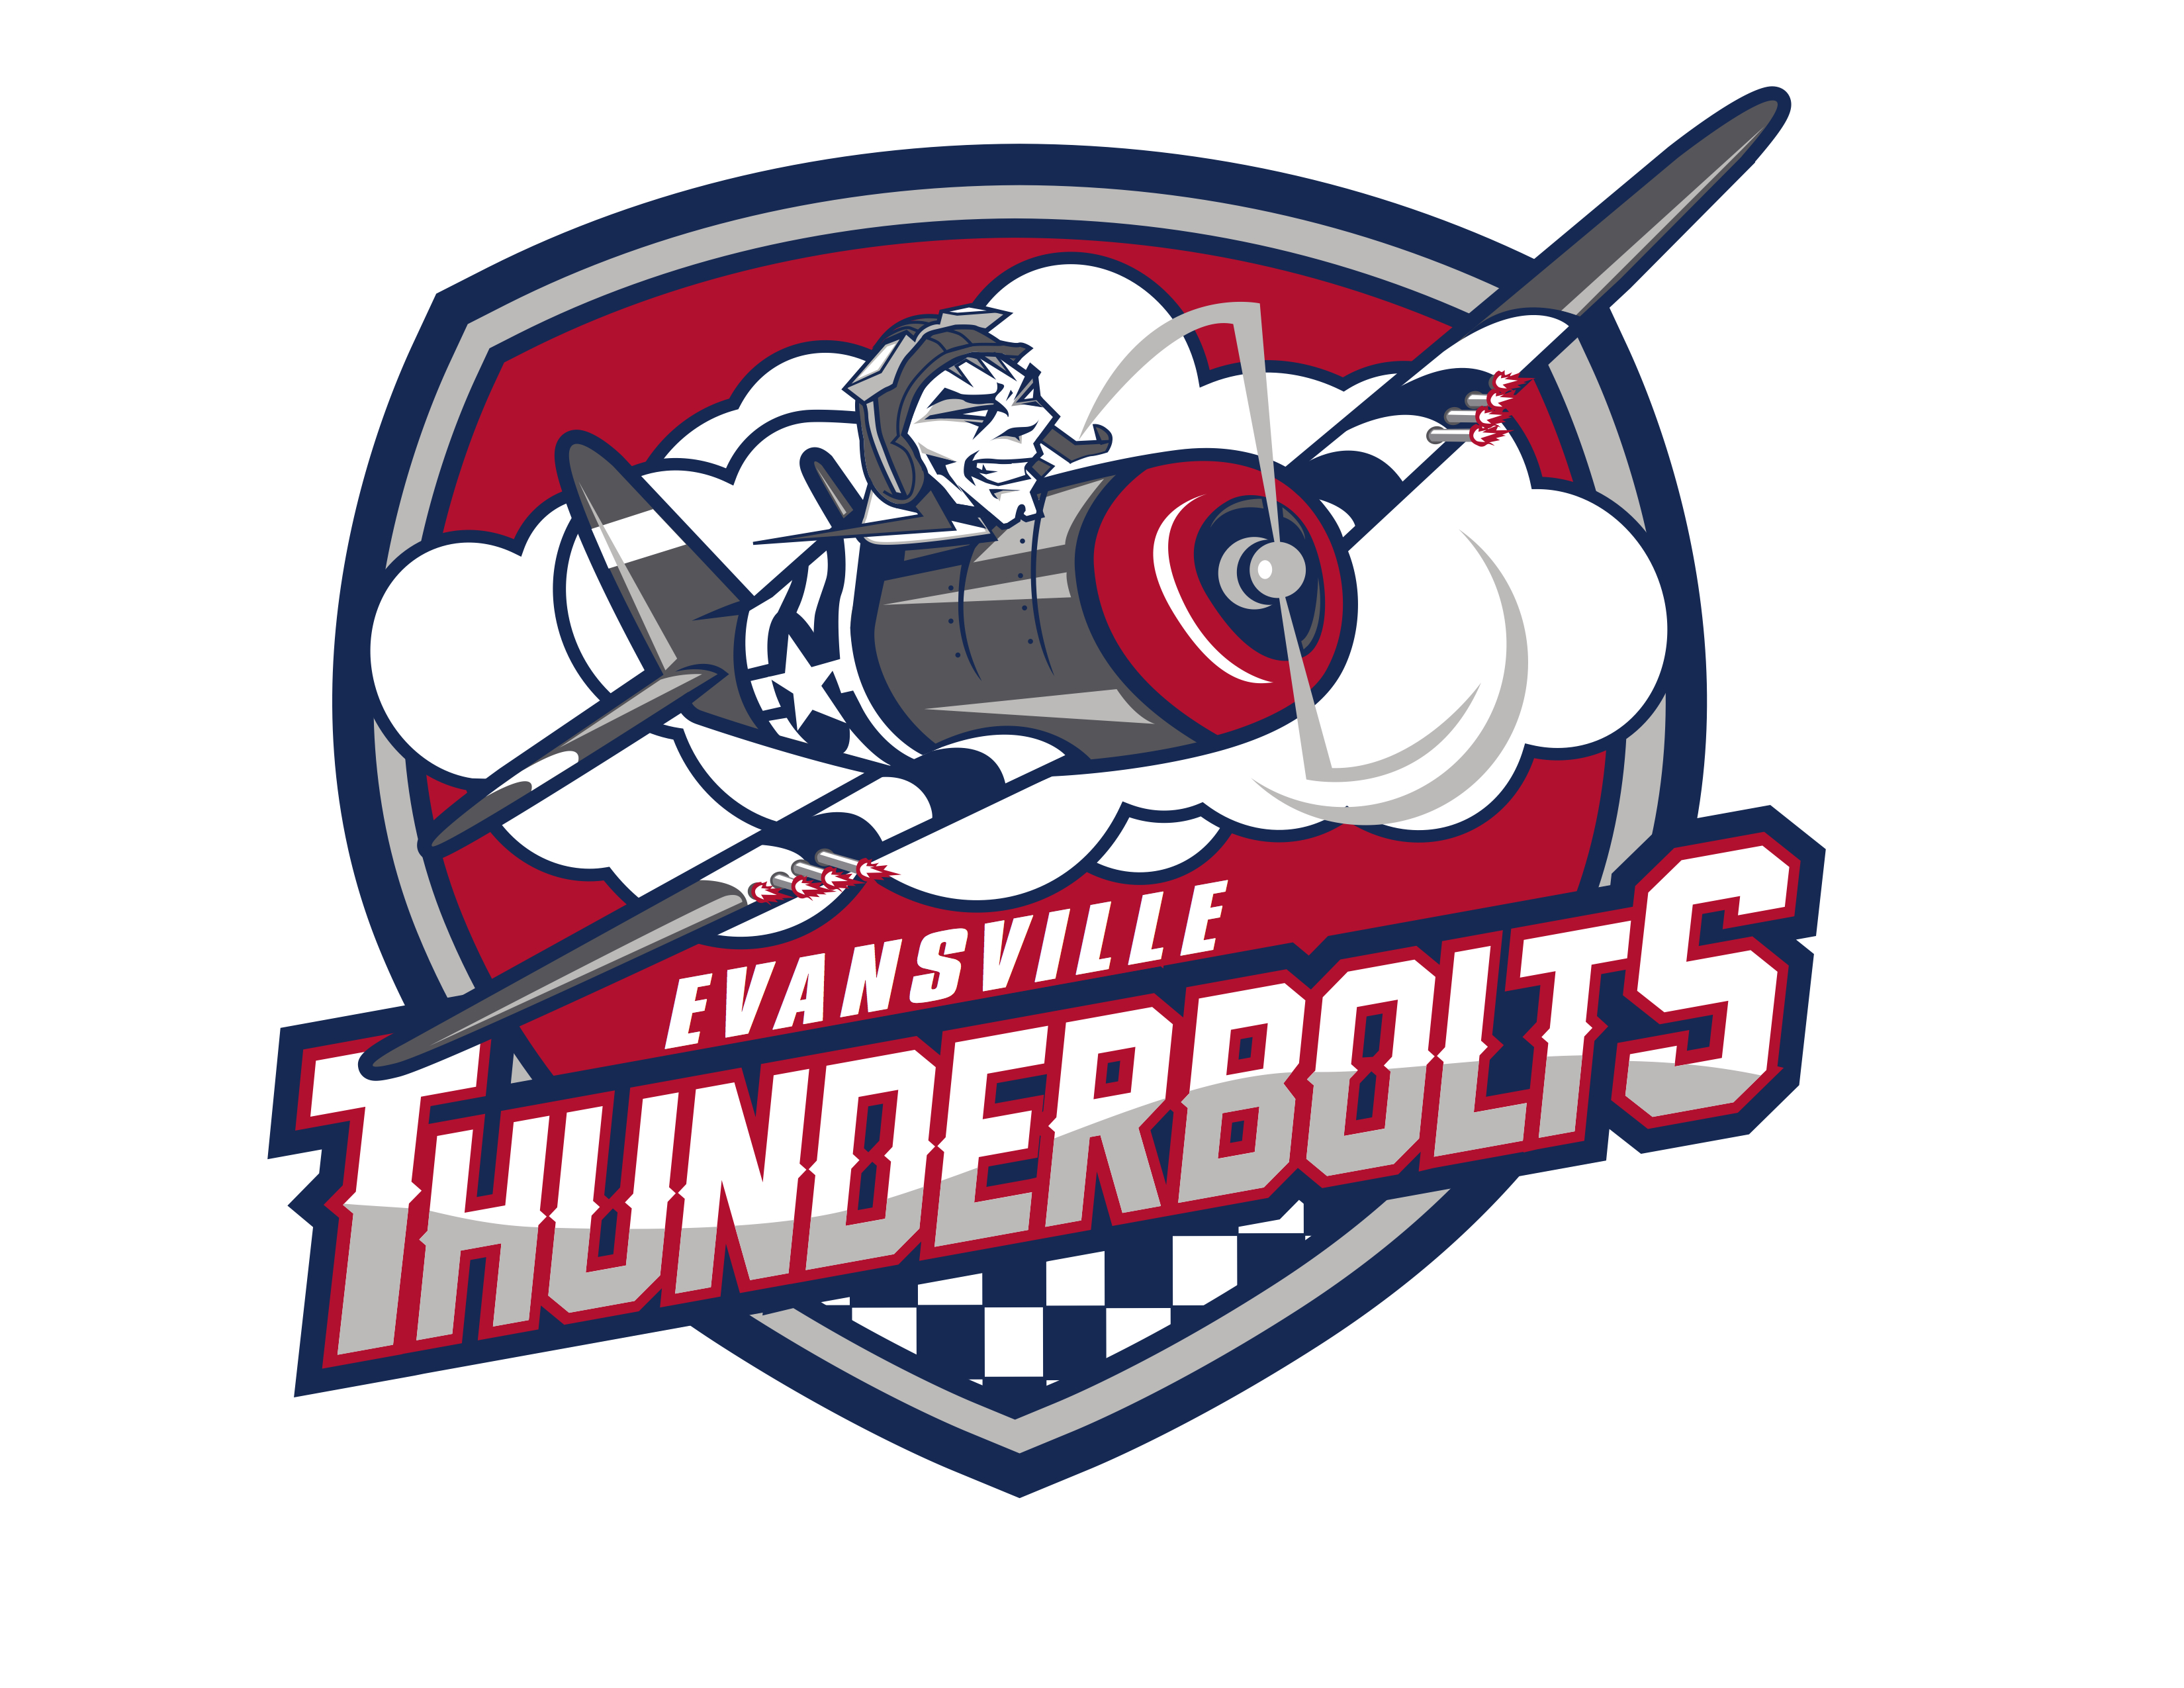 Evansville Thunderbolts Home